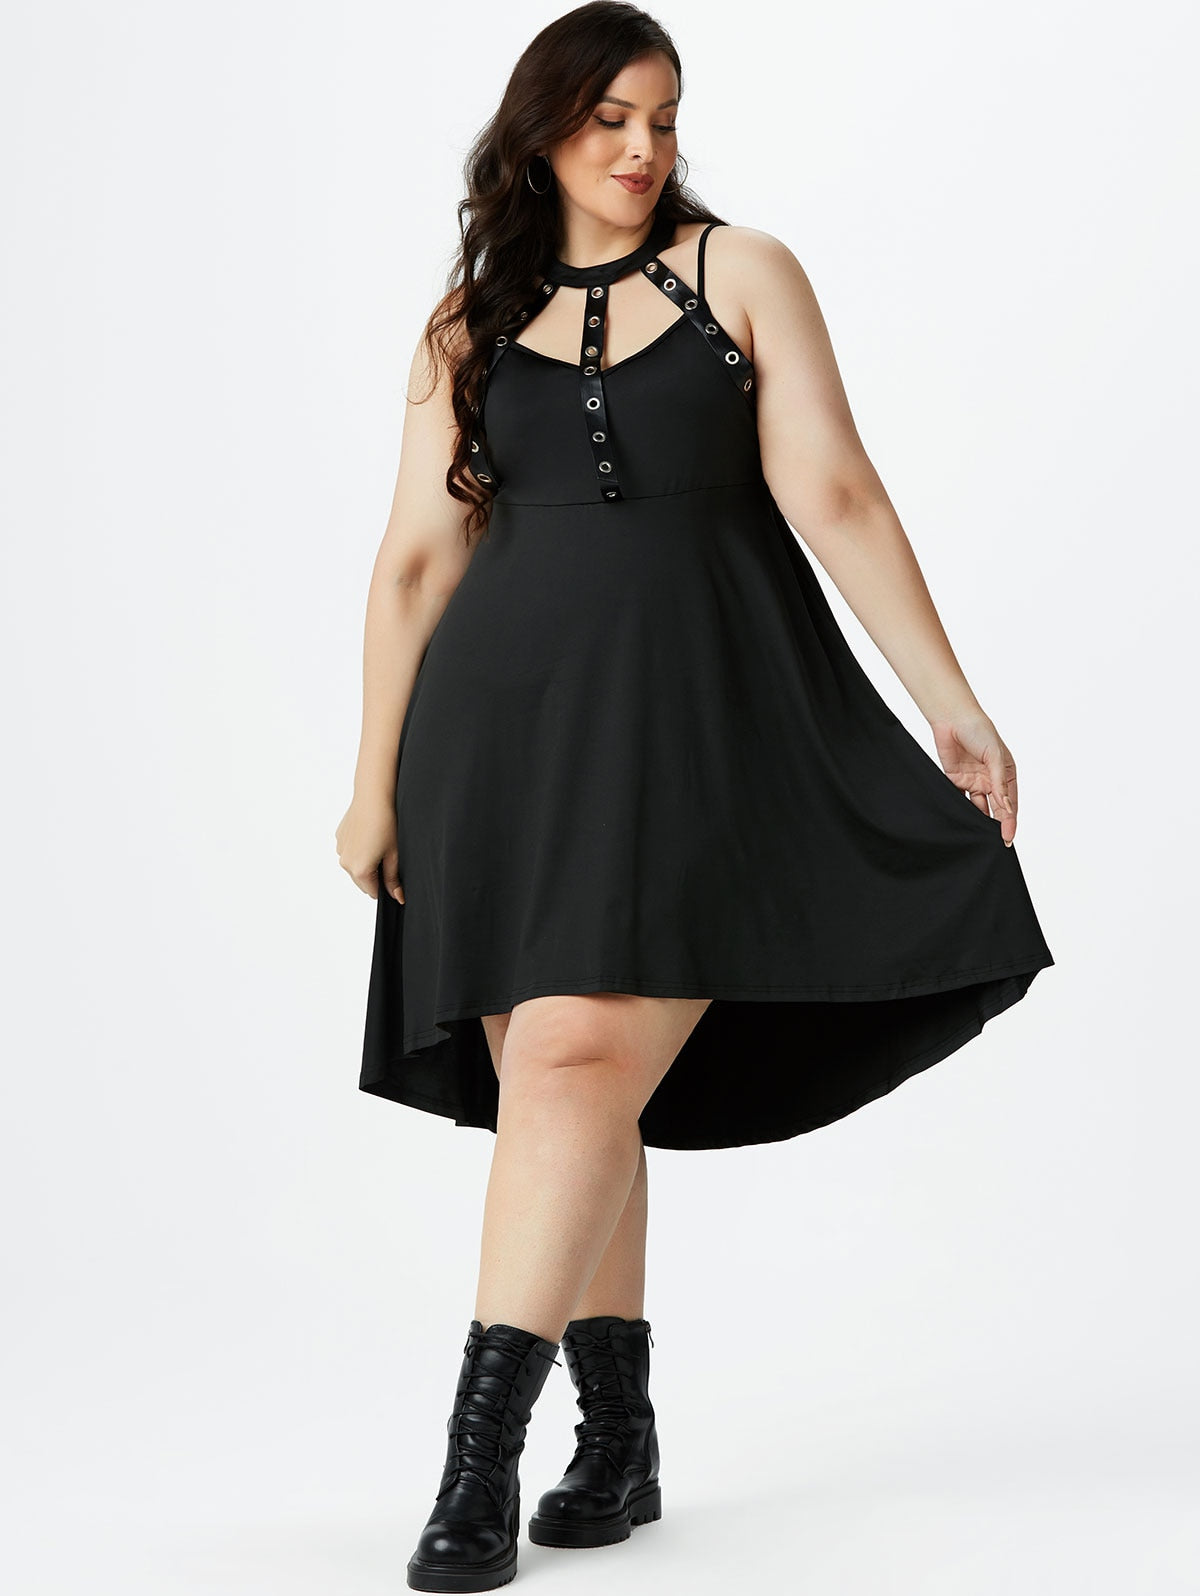 Womens Dresses 5xl Gothic | Gothic Summer Dress 5xl | Rosegal Summer